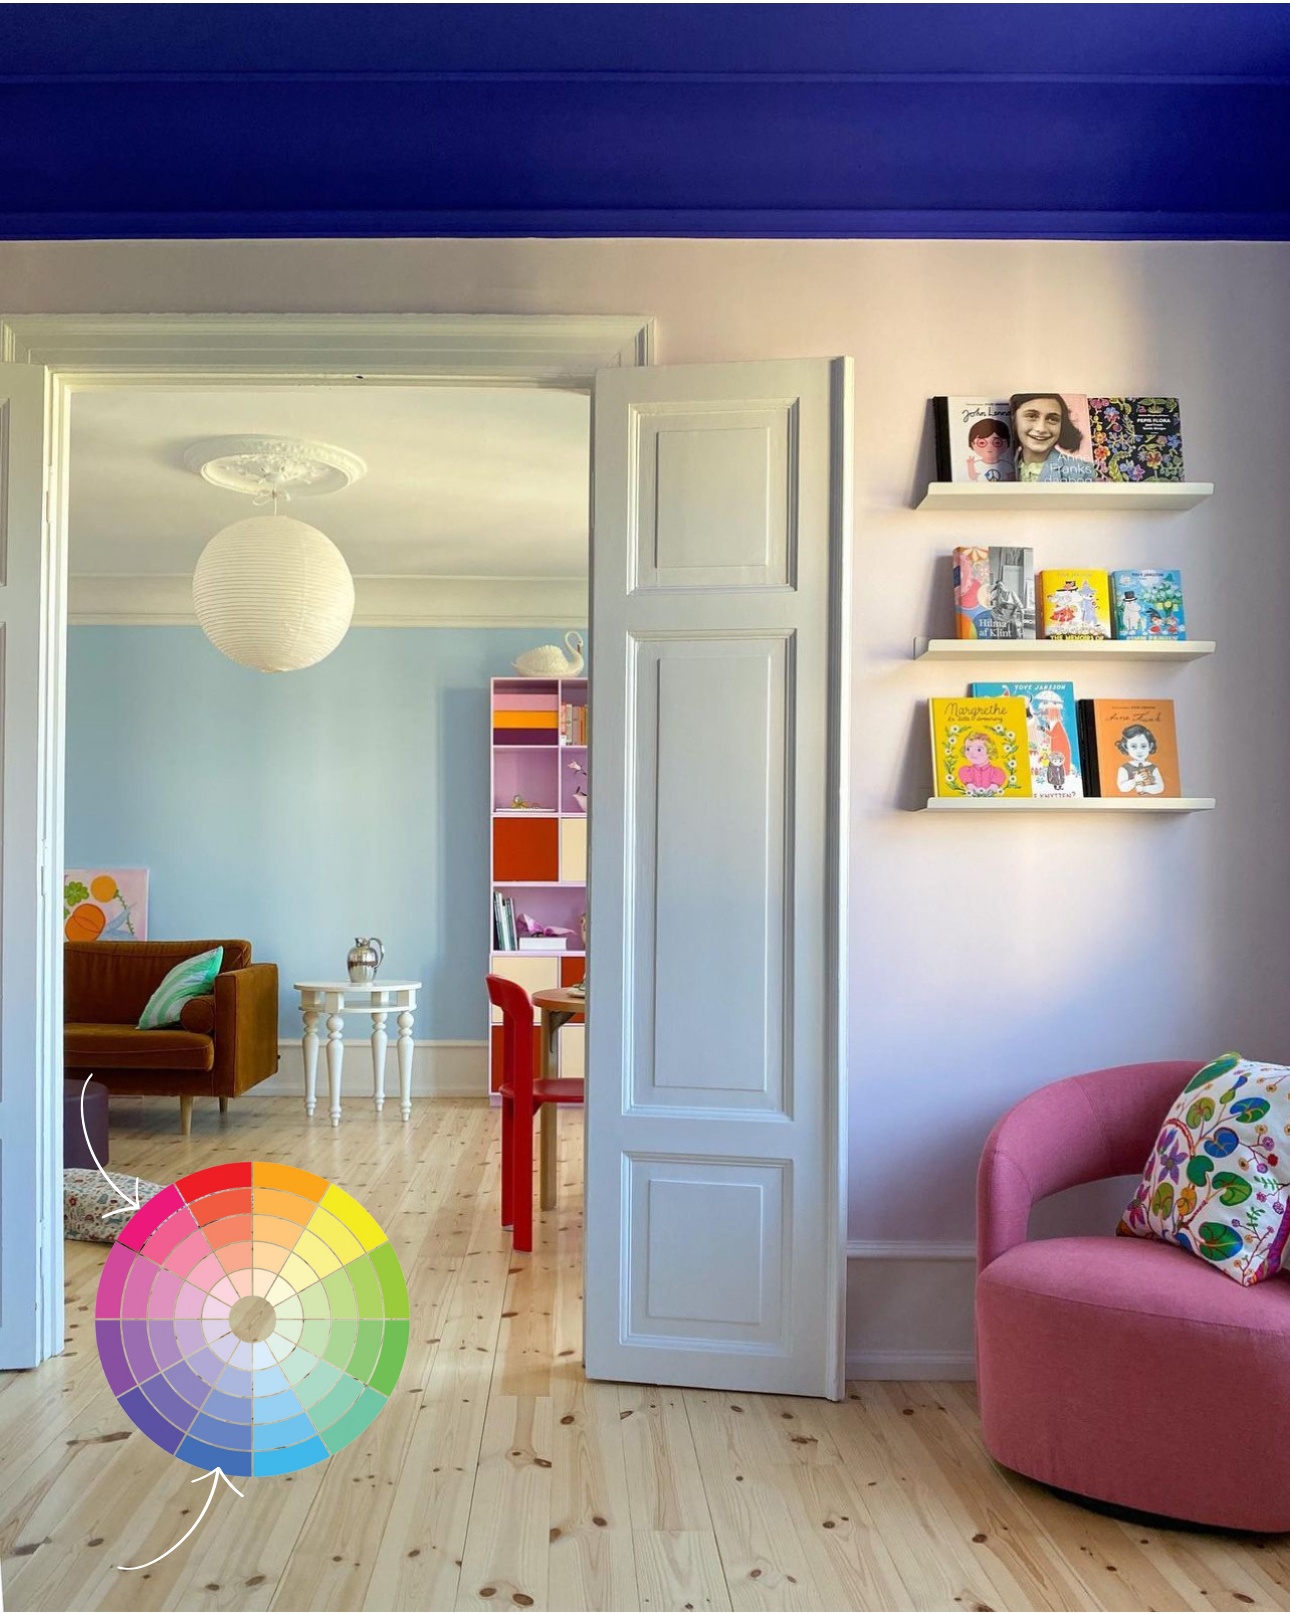 Danish livingroom in vibrant colors.